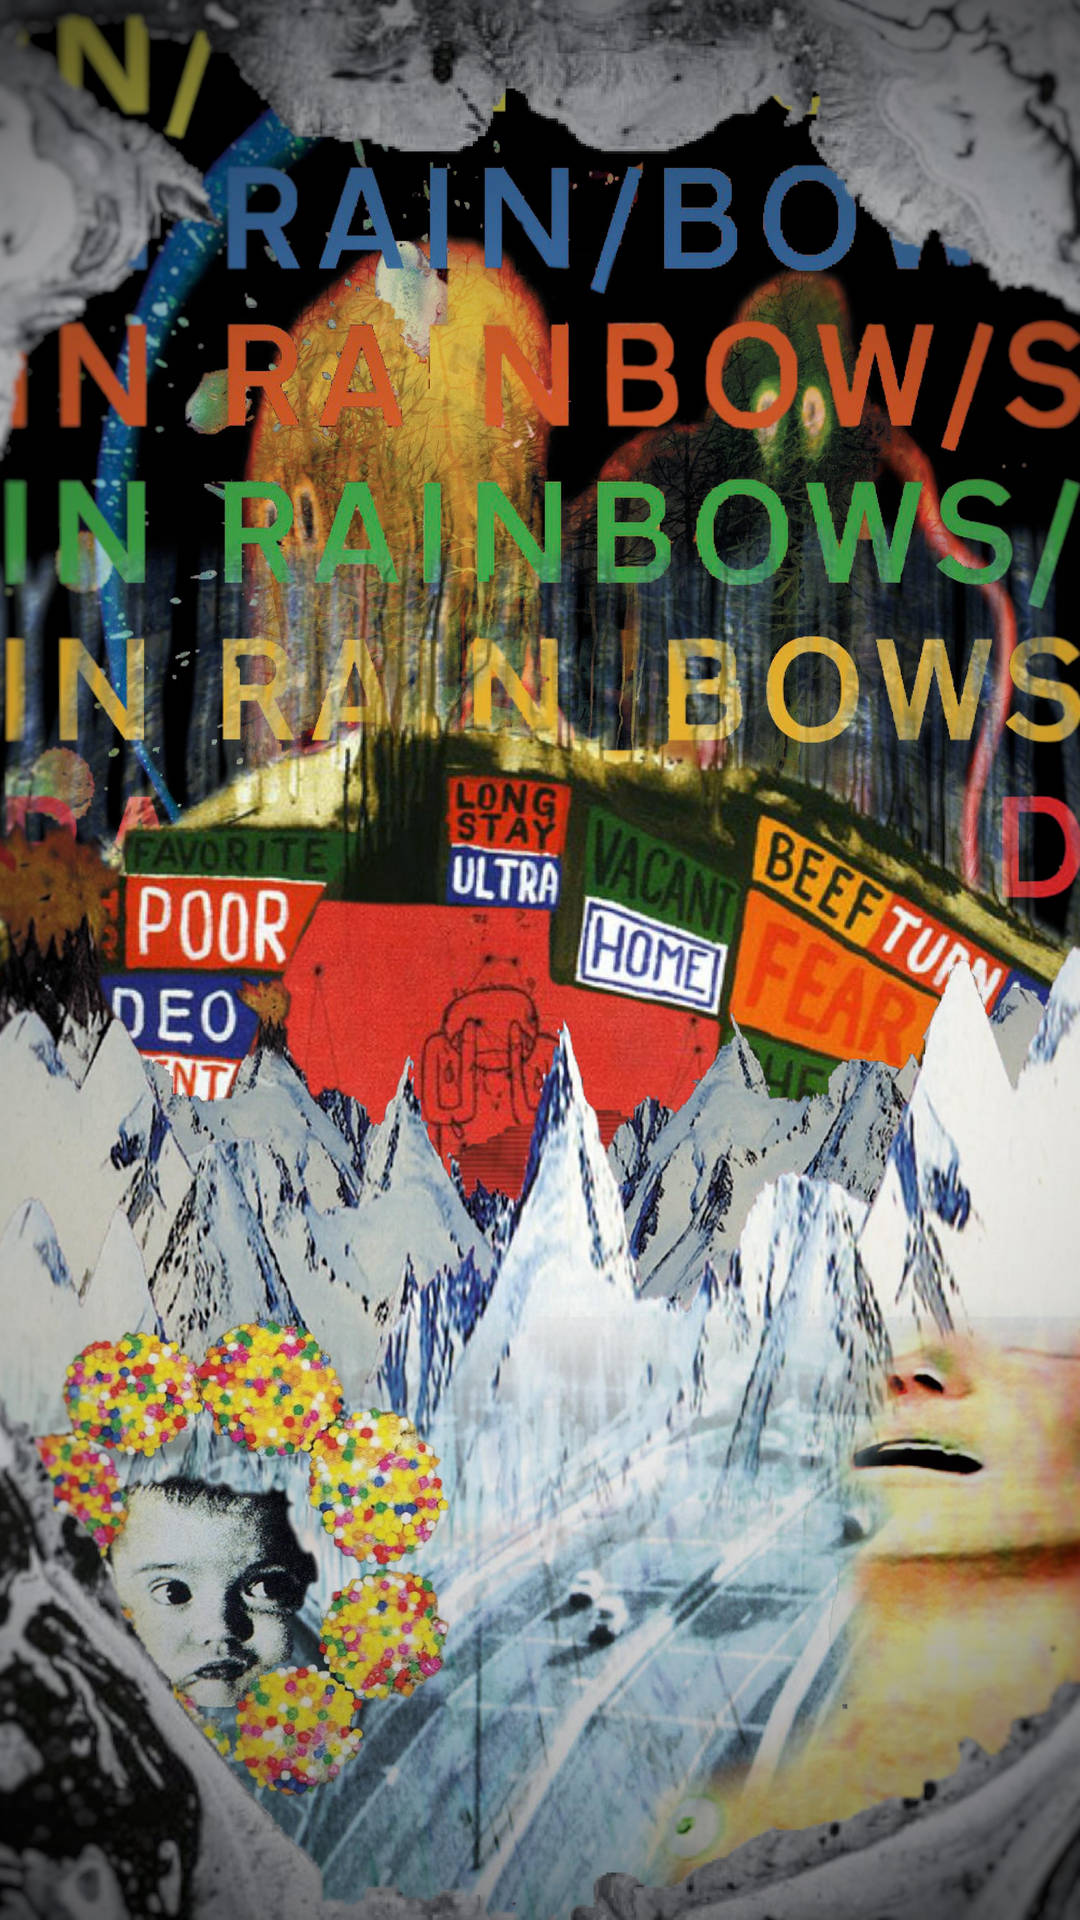 Radioheadalbum-cover-kompilation Fanart Wallpaper